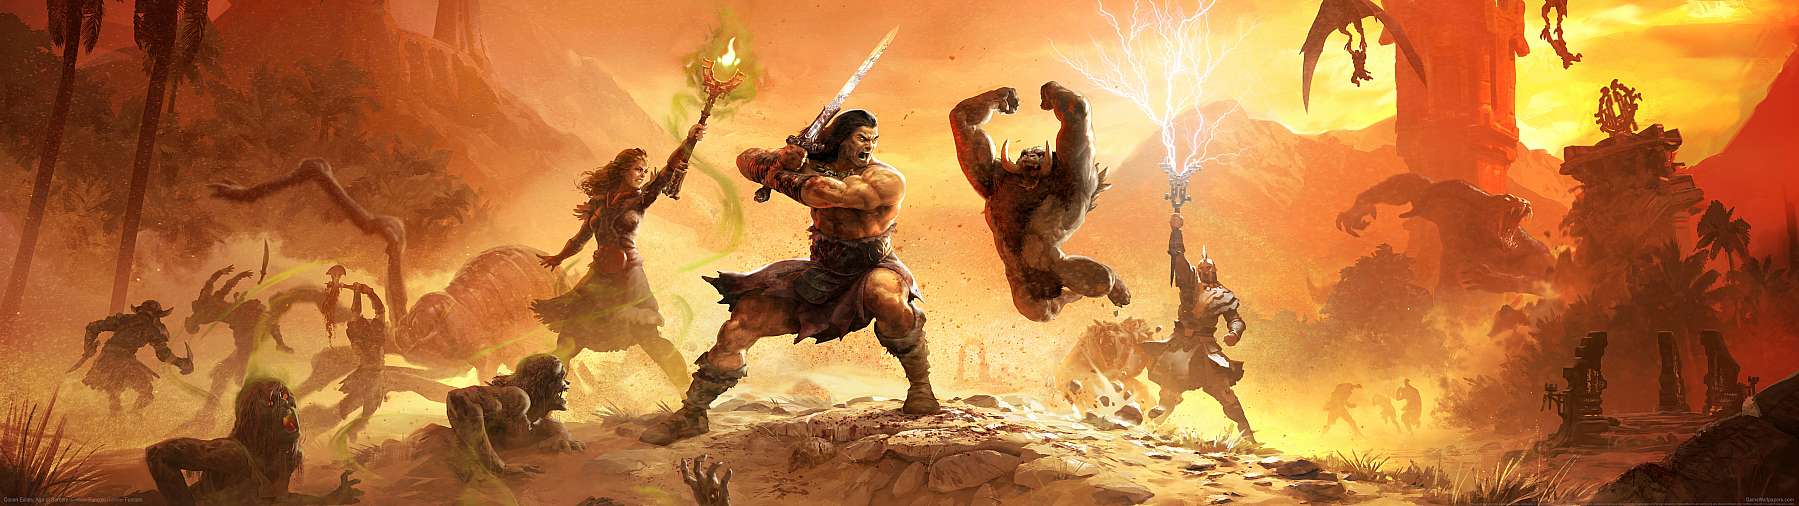 Conan Exiles: Age of Sorcery fond d'écran